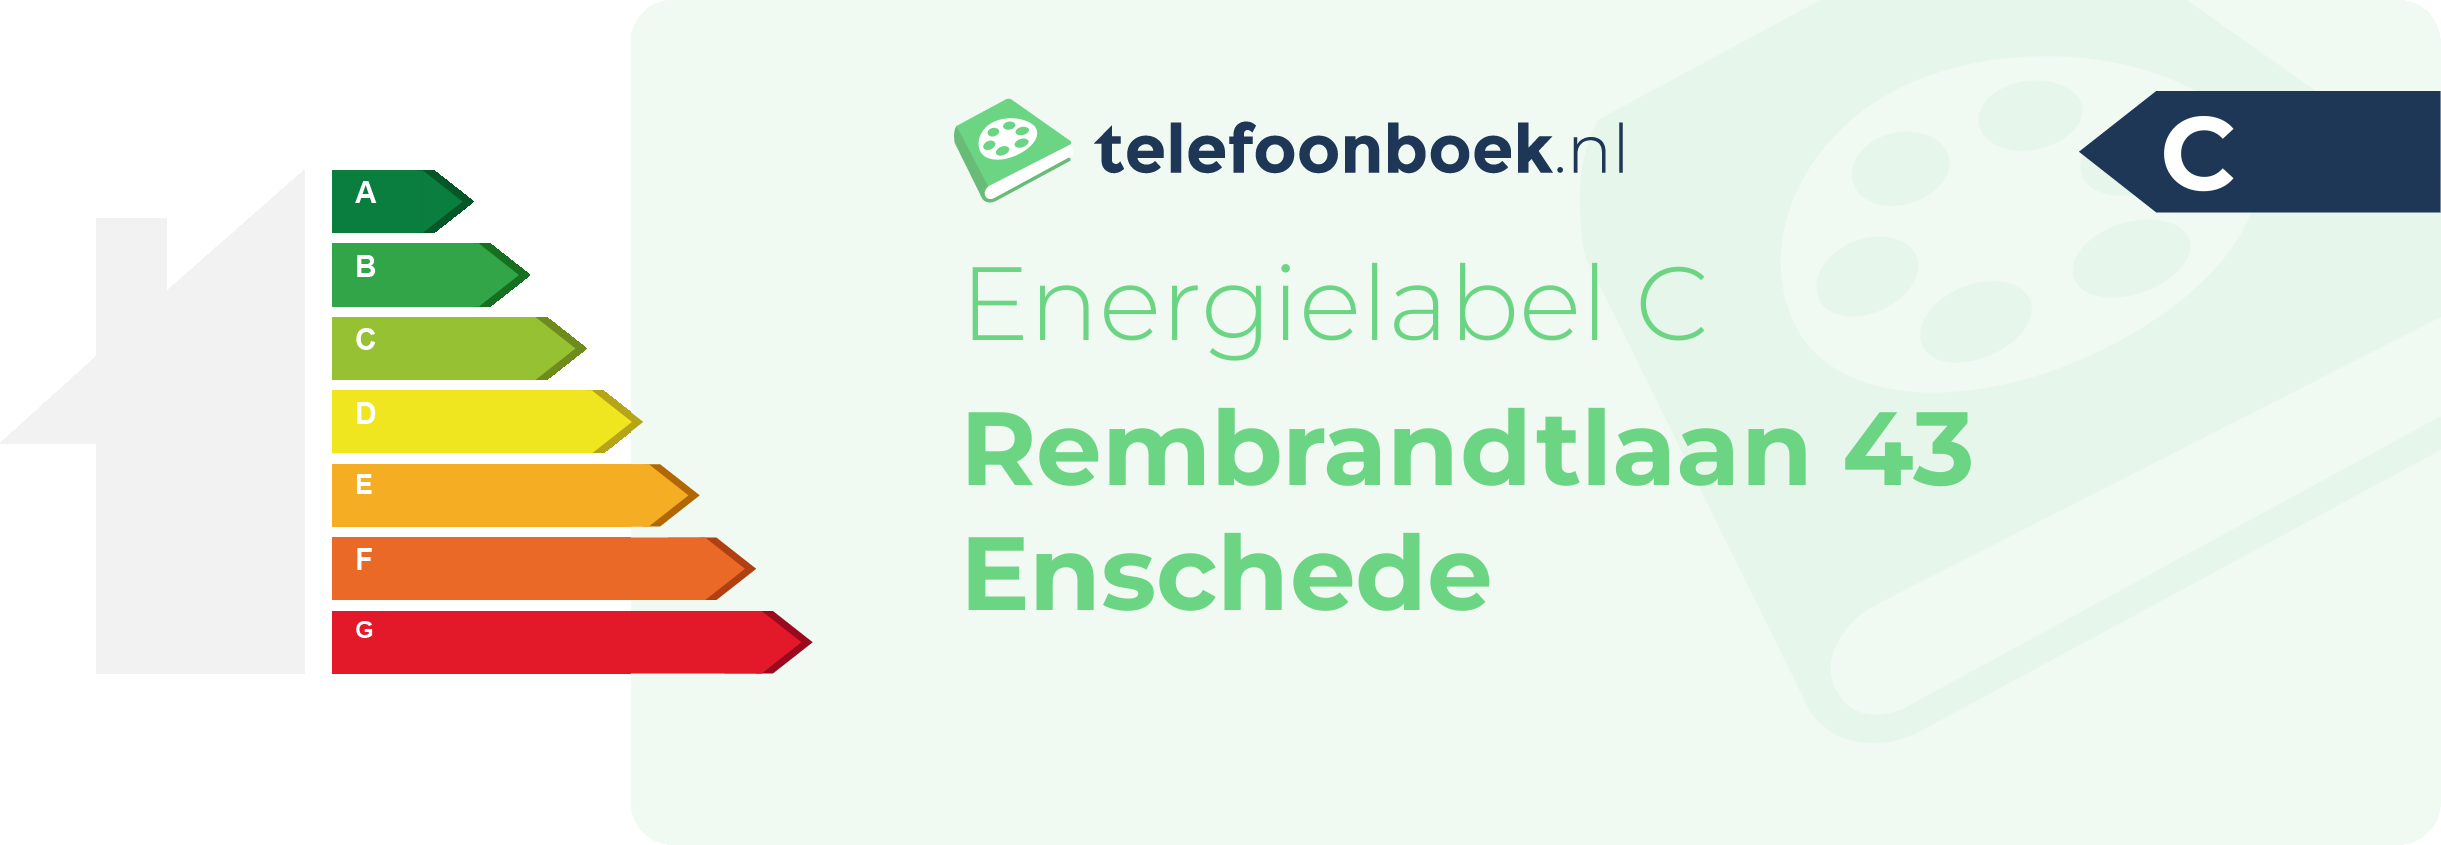 Energielabel Rembrandtlaan 43 Enschede